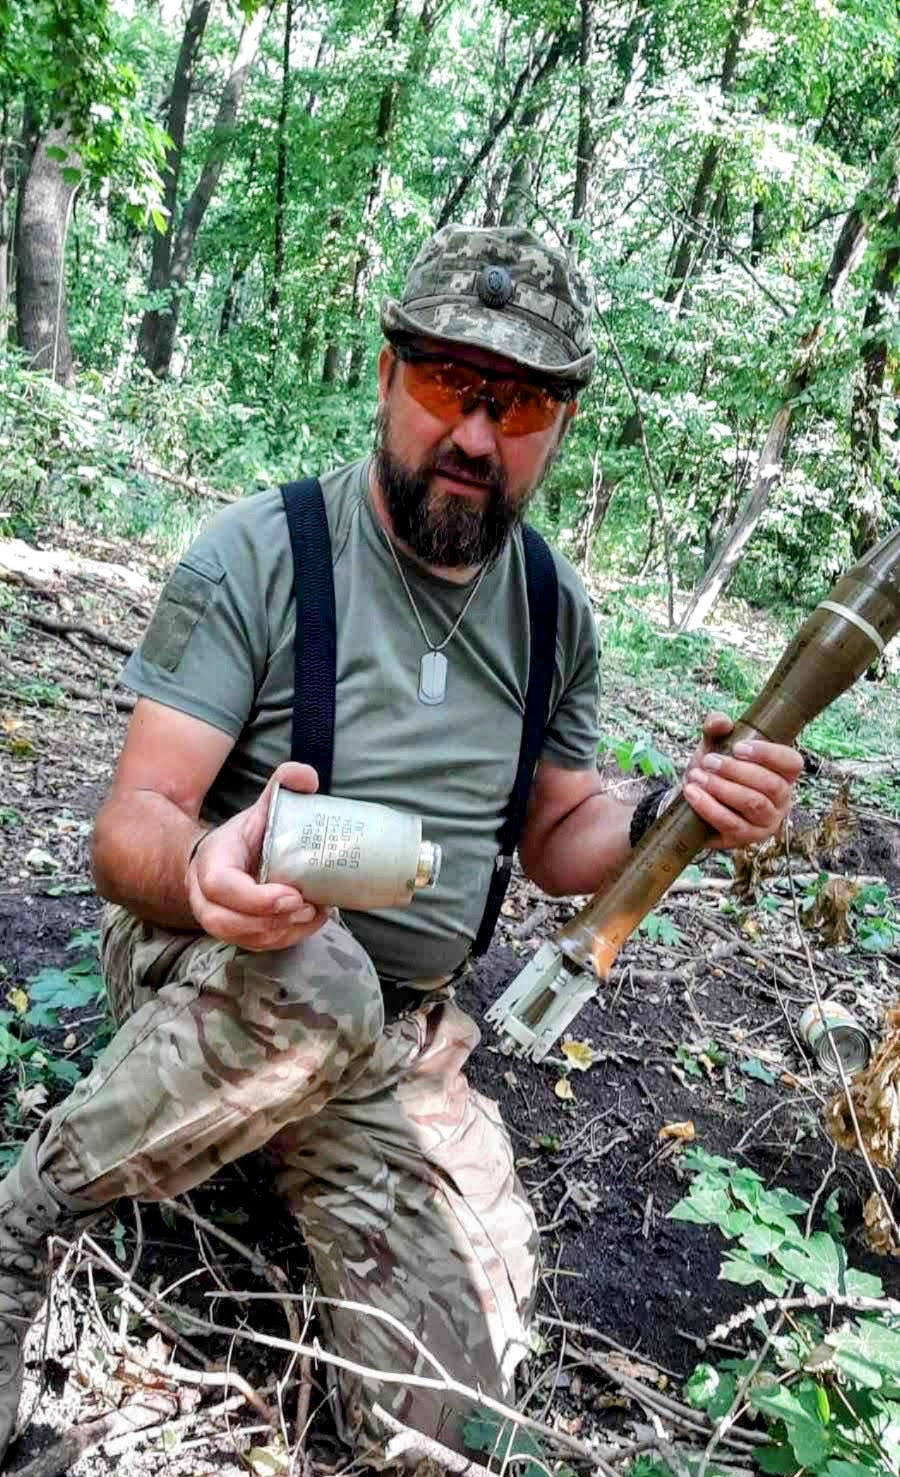 Andrei defended Ukraine